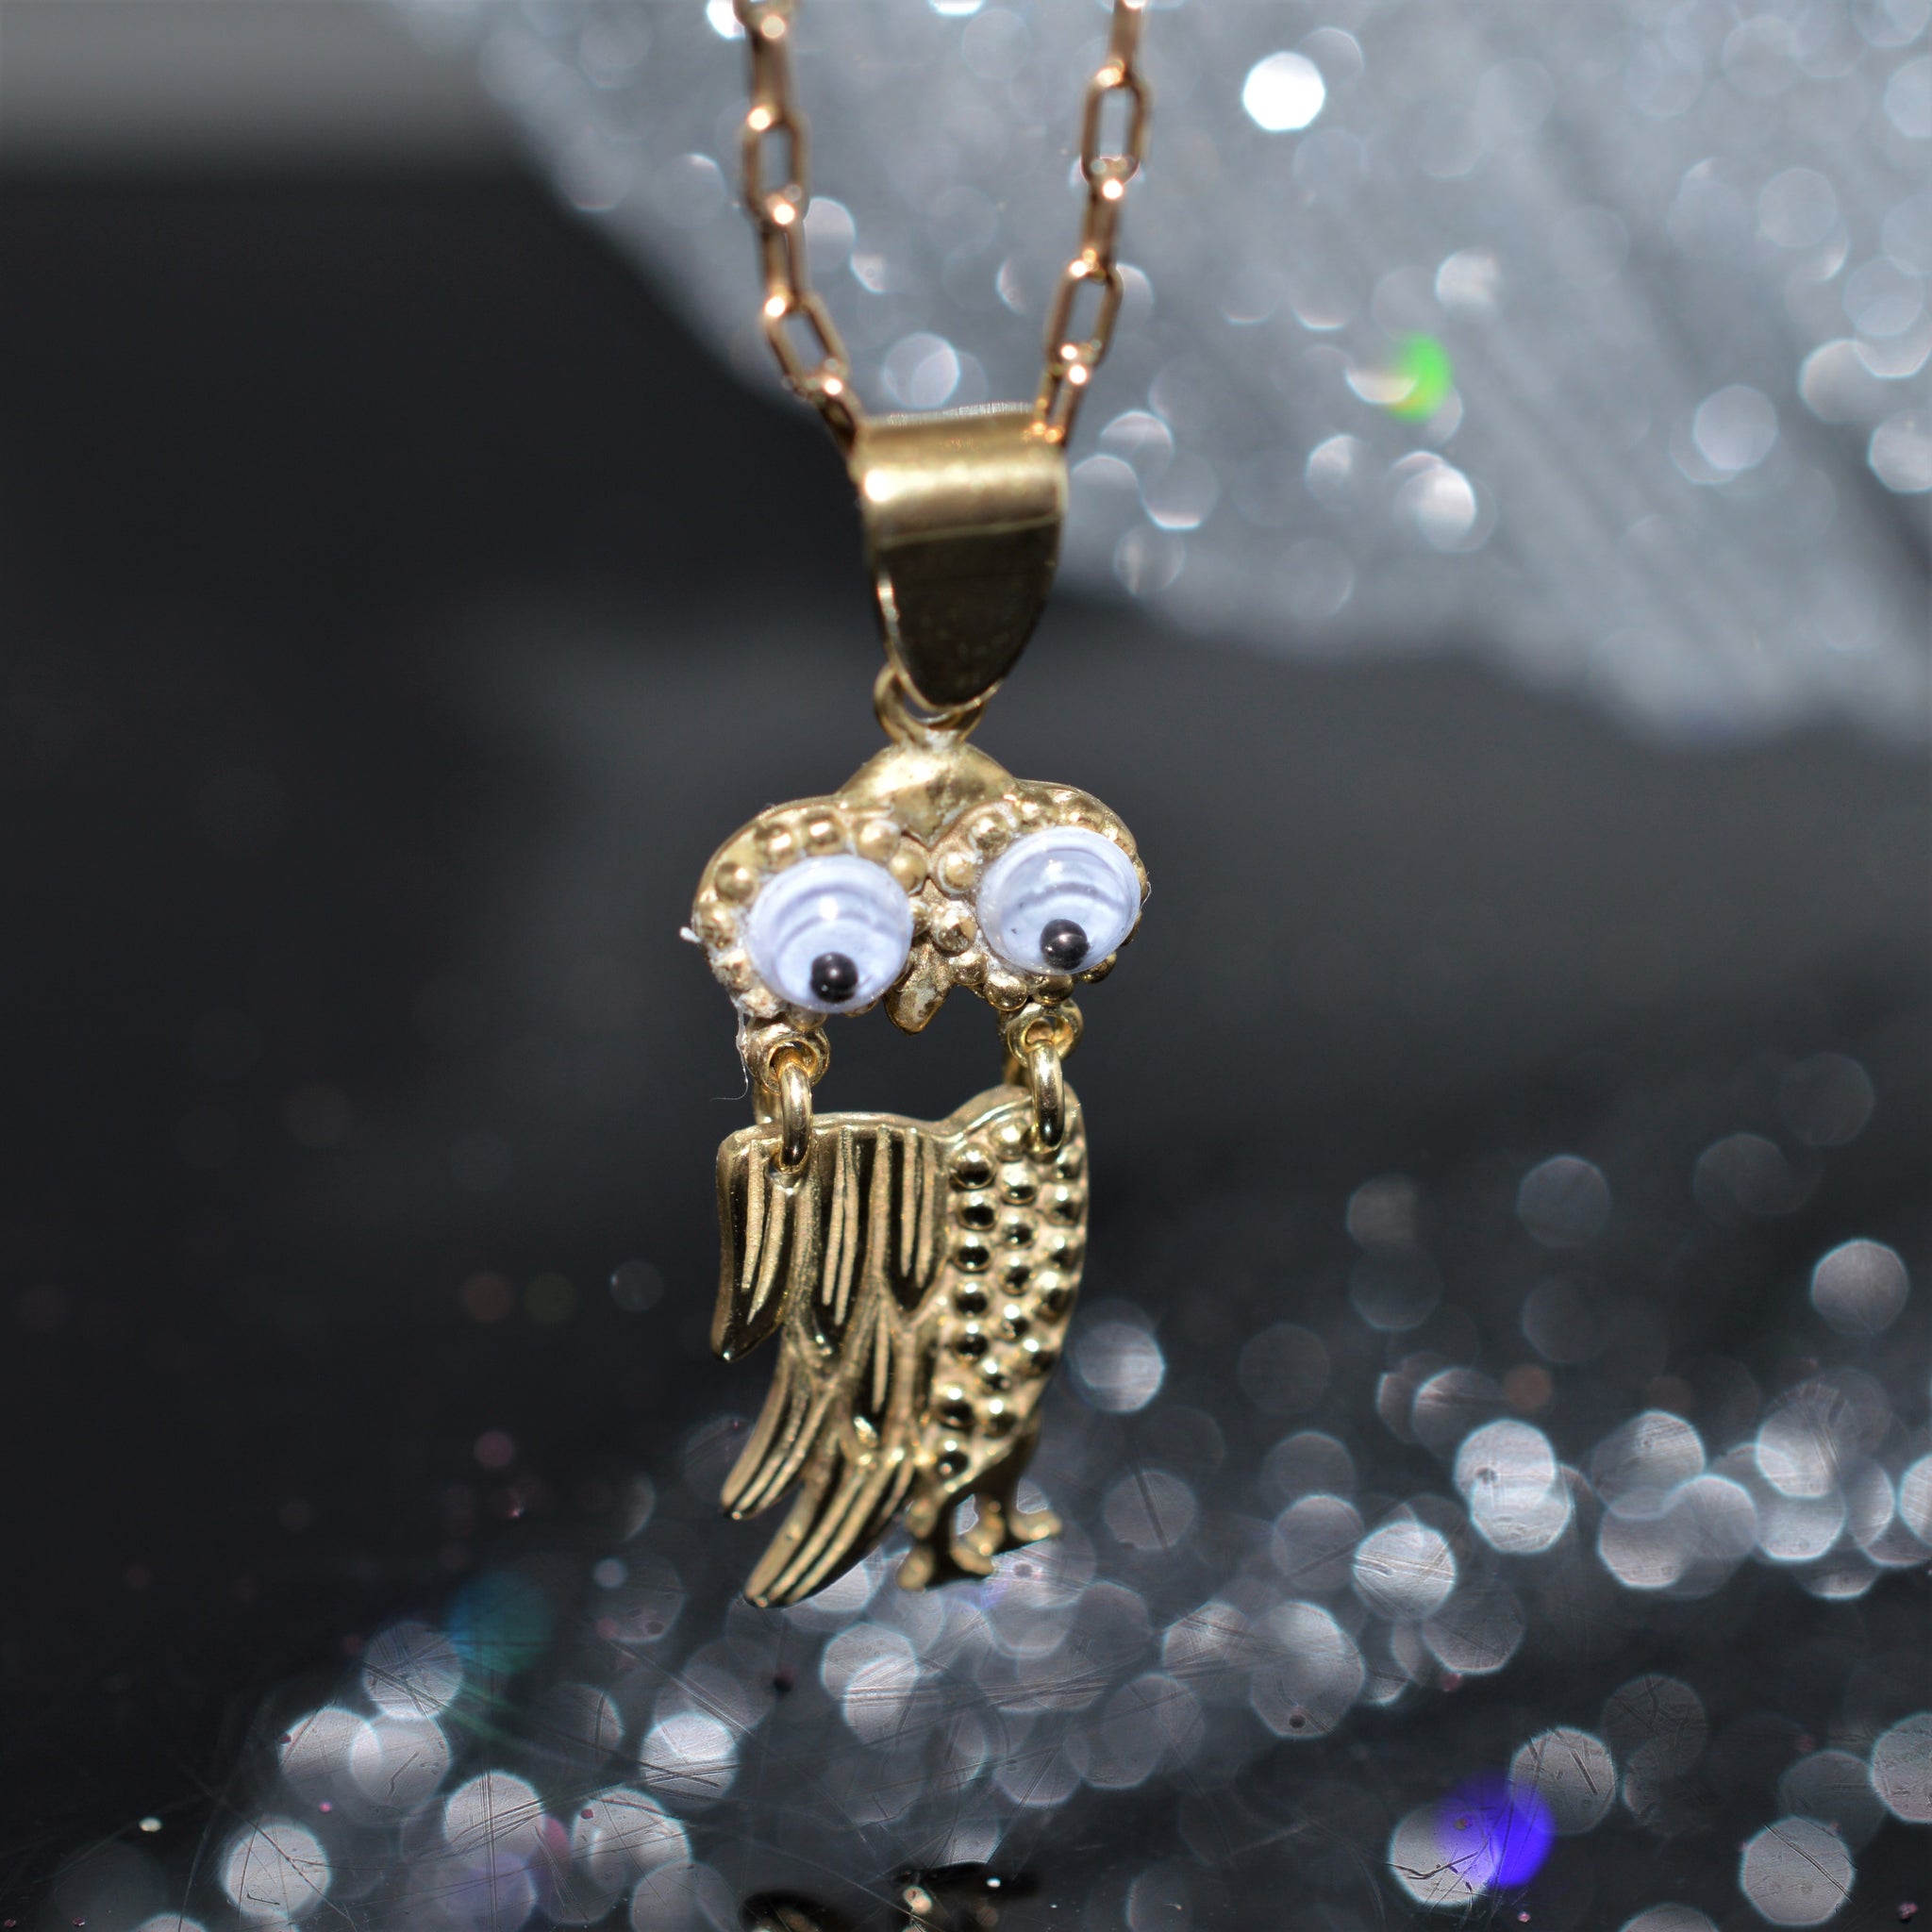 West Virginia Crystal Logo Necklace – Seasons Jewelry